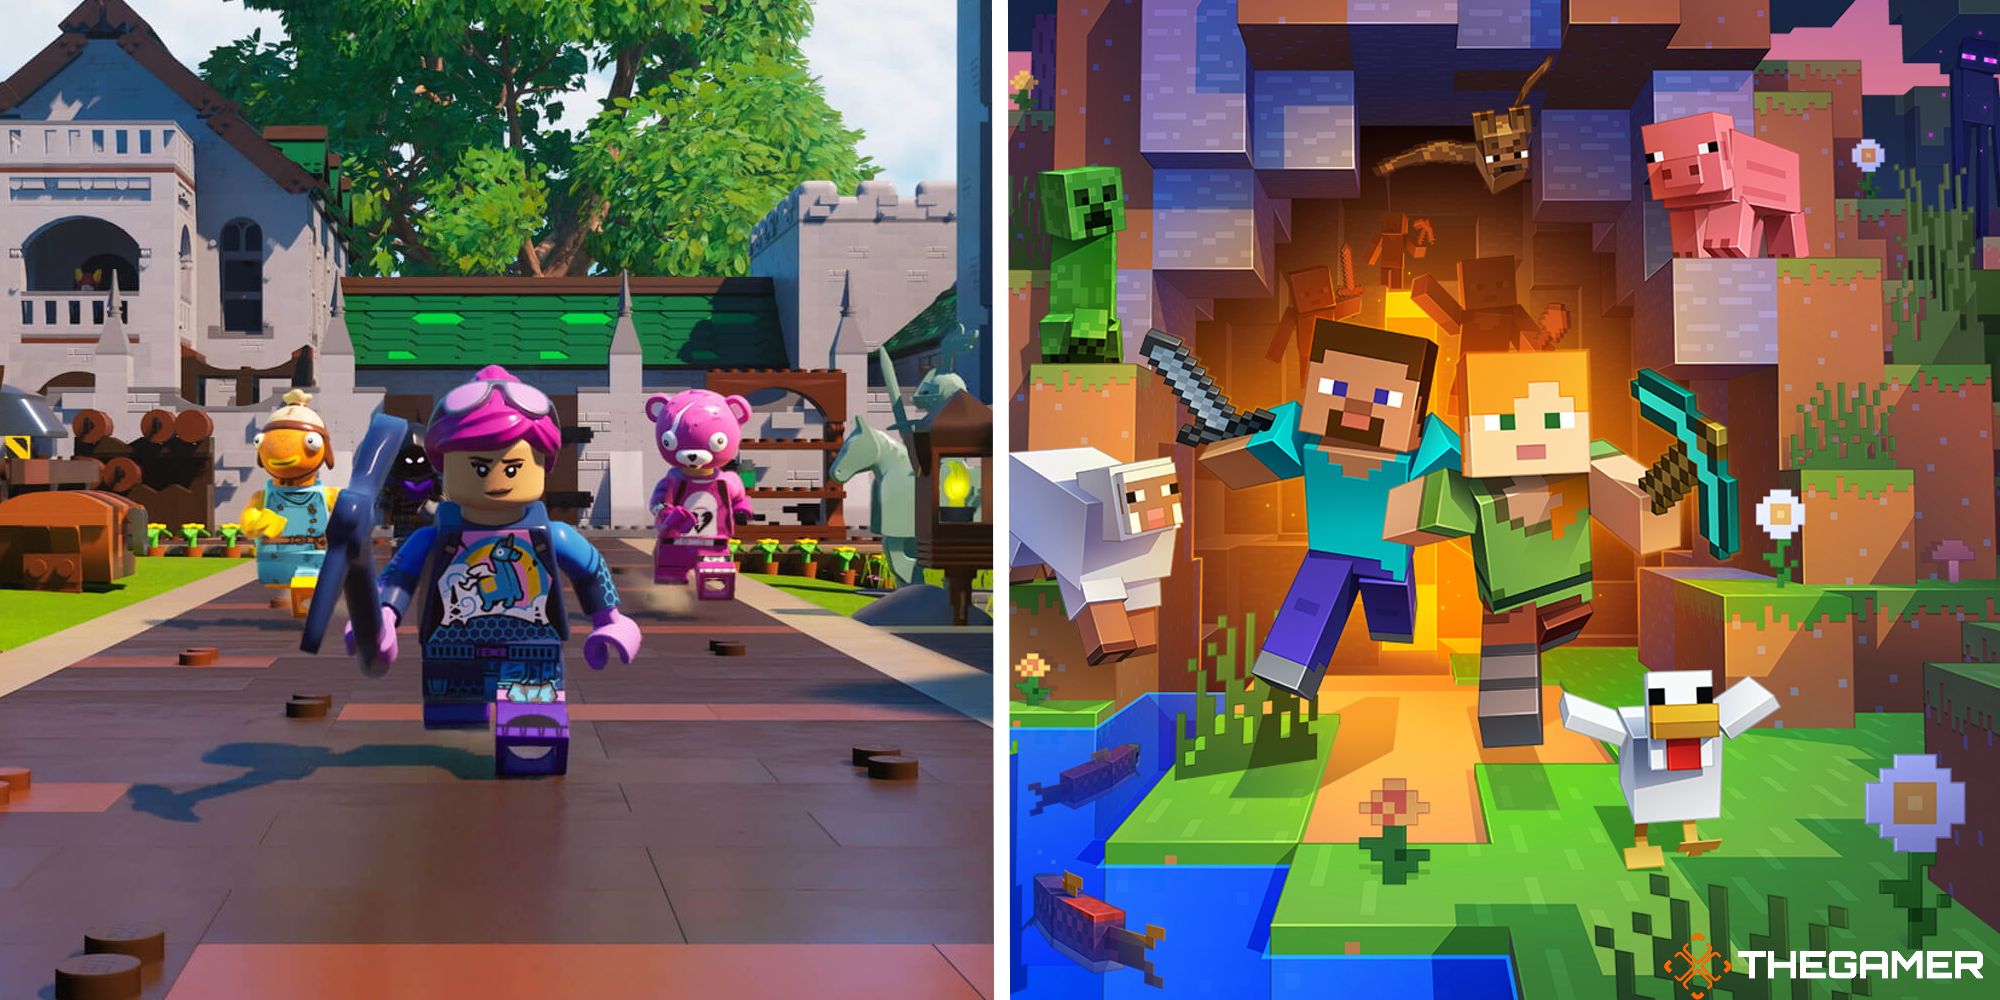 Lego Fortnite feels like Minecraft for the metaverse era